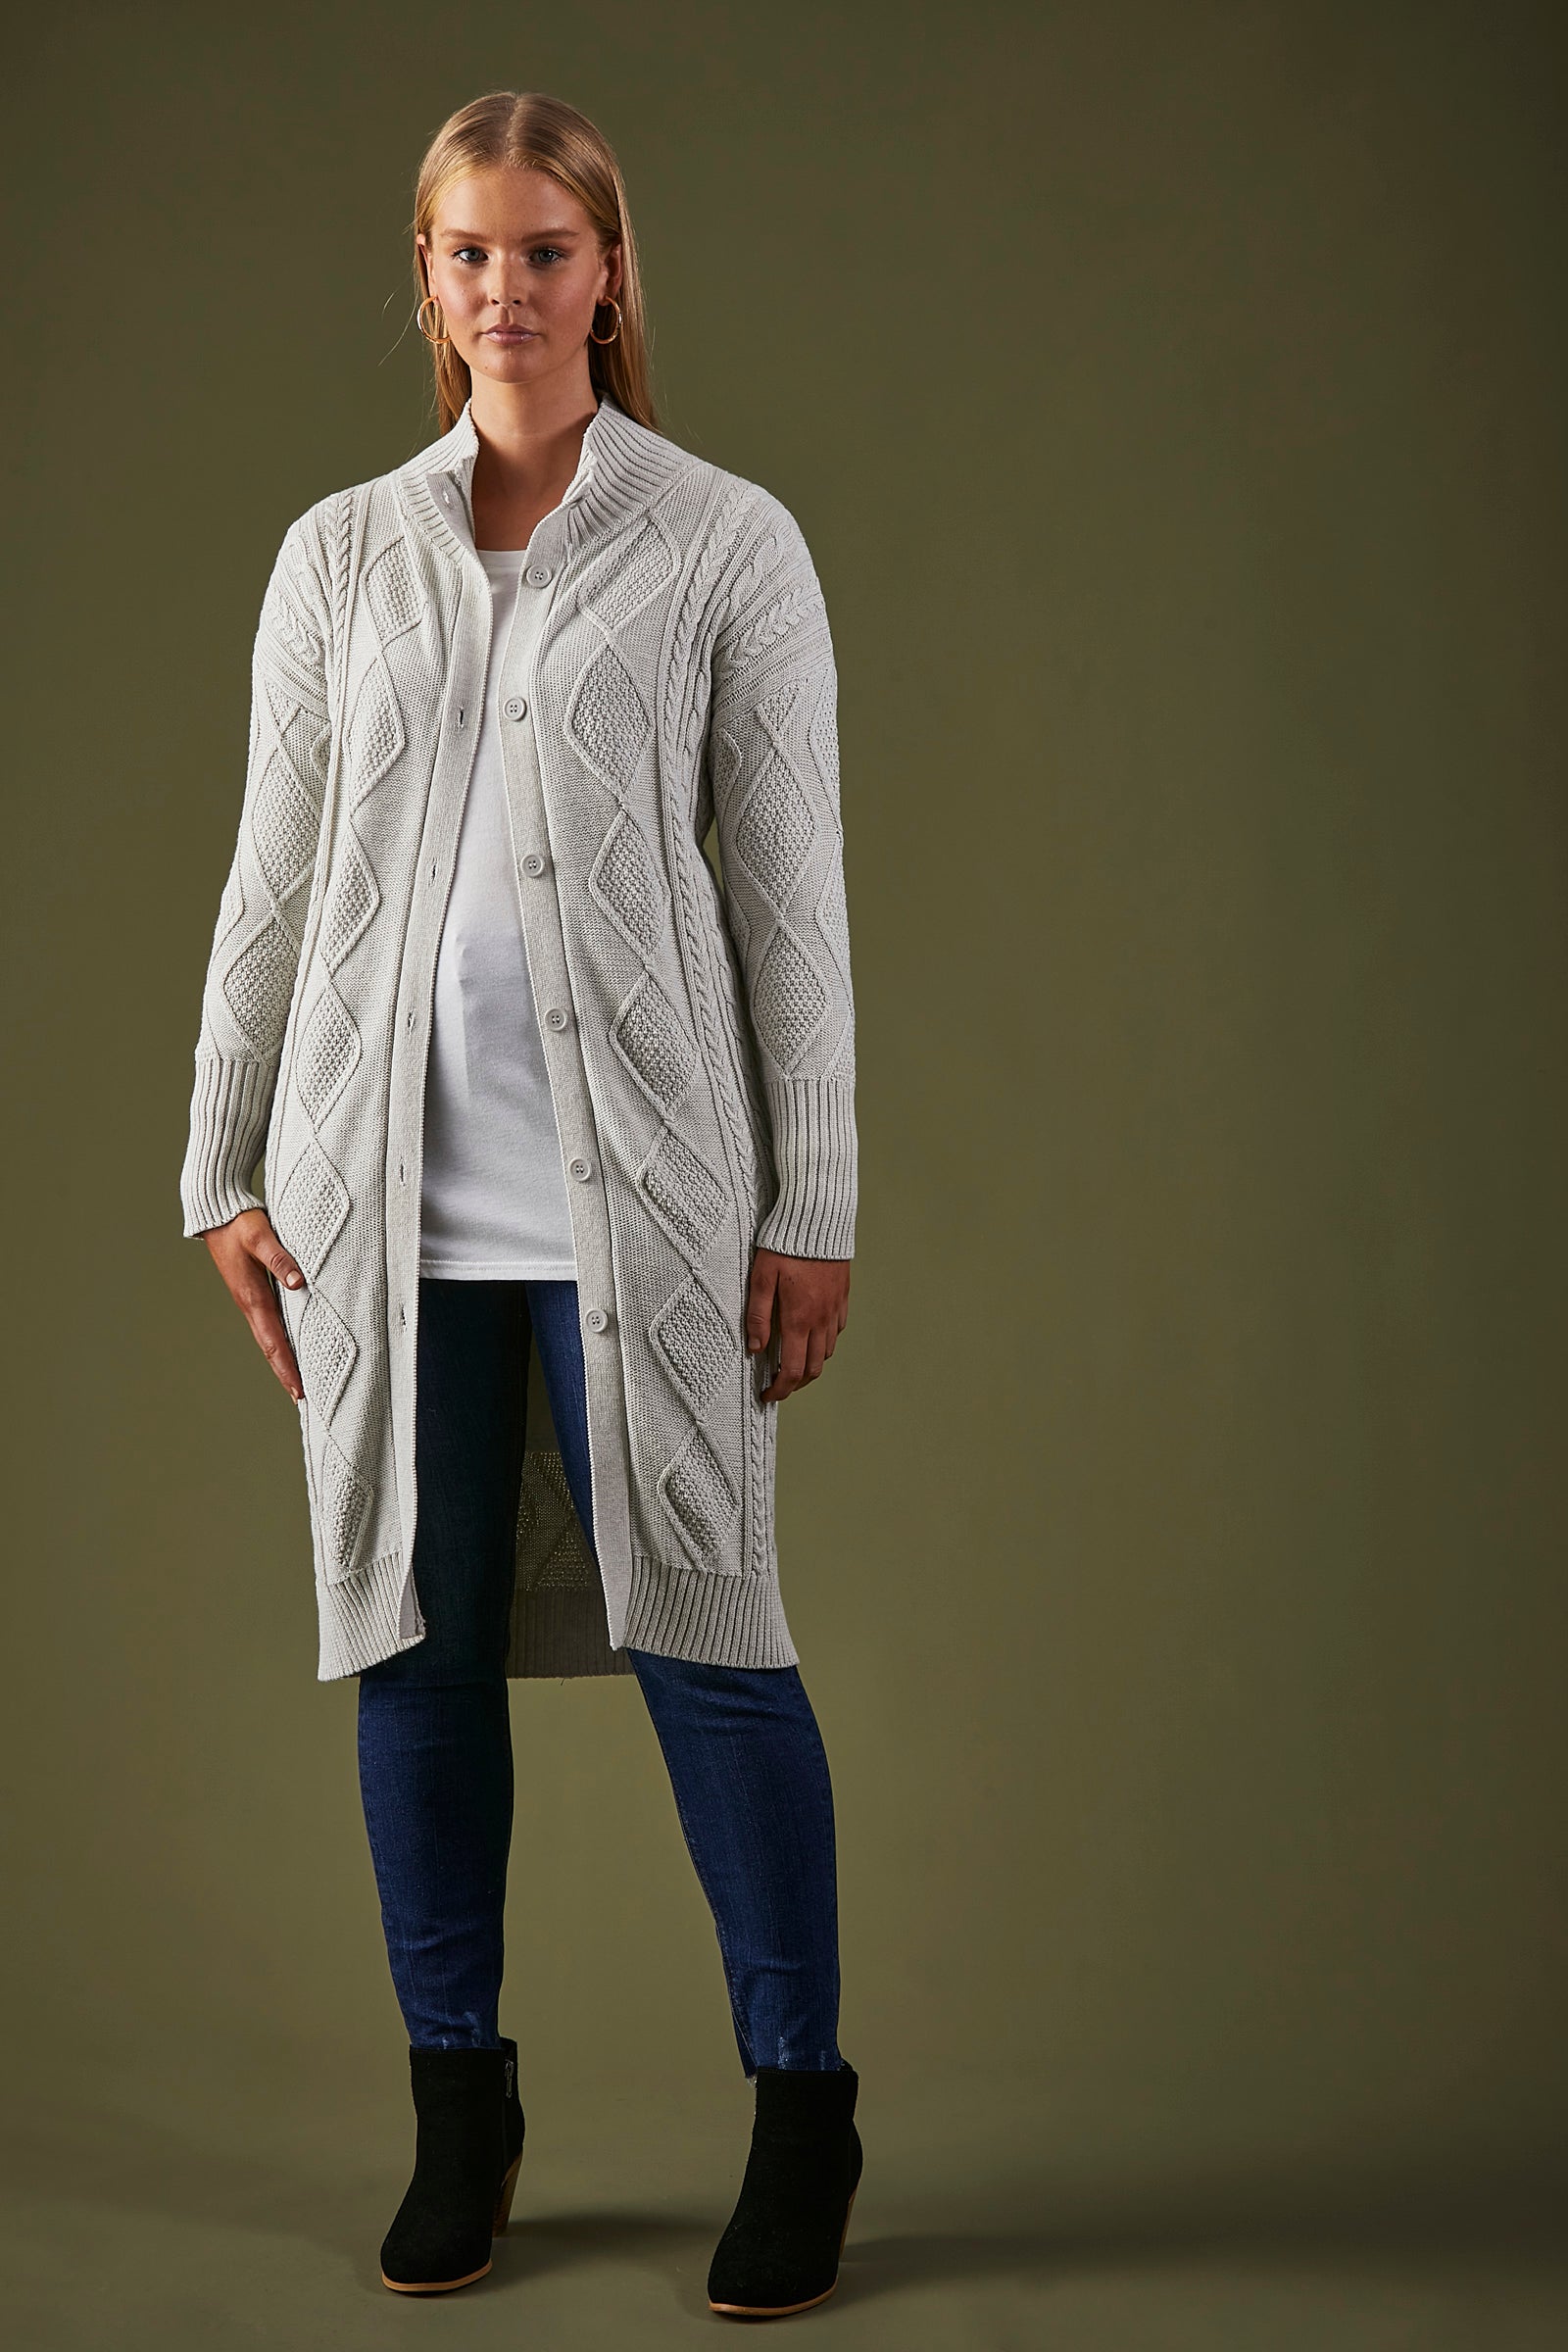 Sepia Cardigan - Quartz - eb&ive Clothing - Knit Cardigan Long